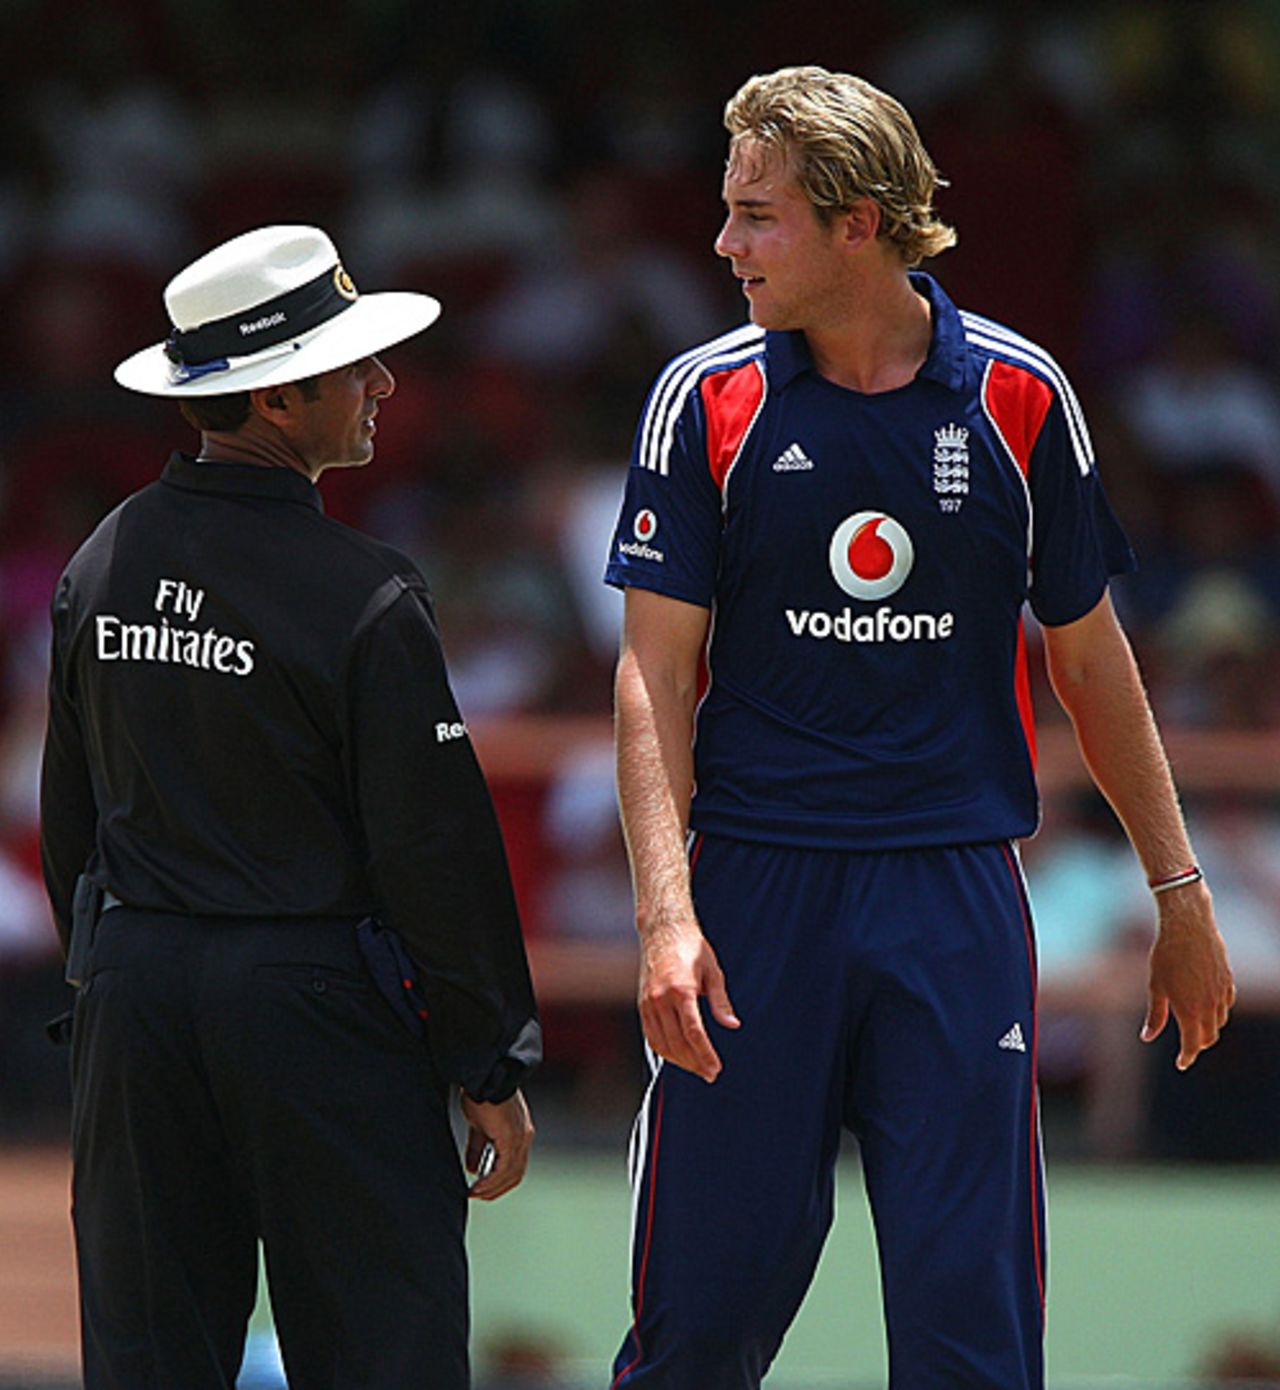 Stuart Broad and Aleem Dar exchange words after the umpire signalled him for several wides, West Indies v England, 2nd ODI, Providence